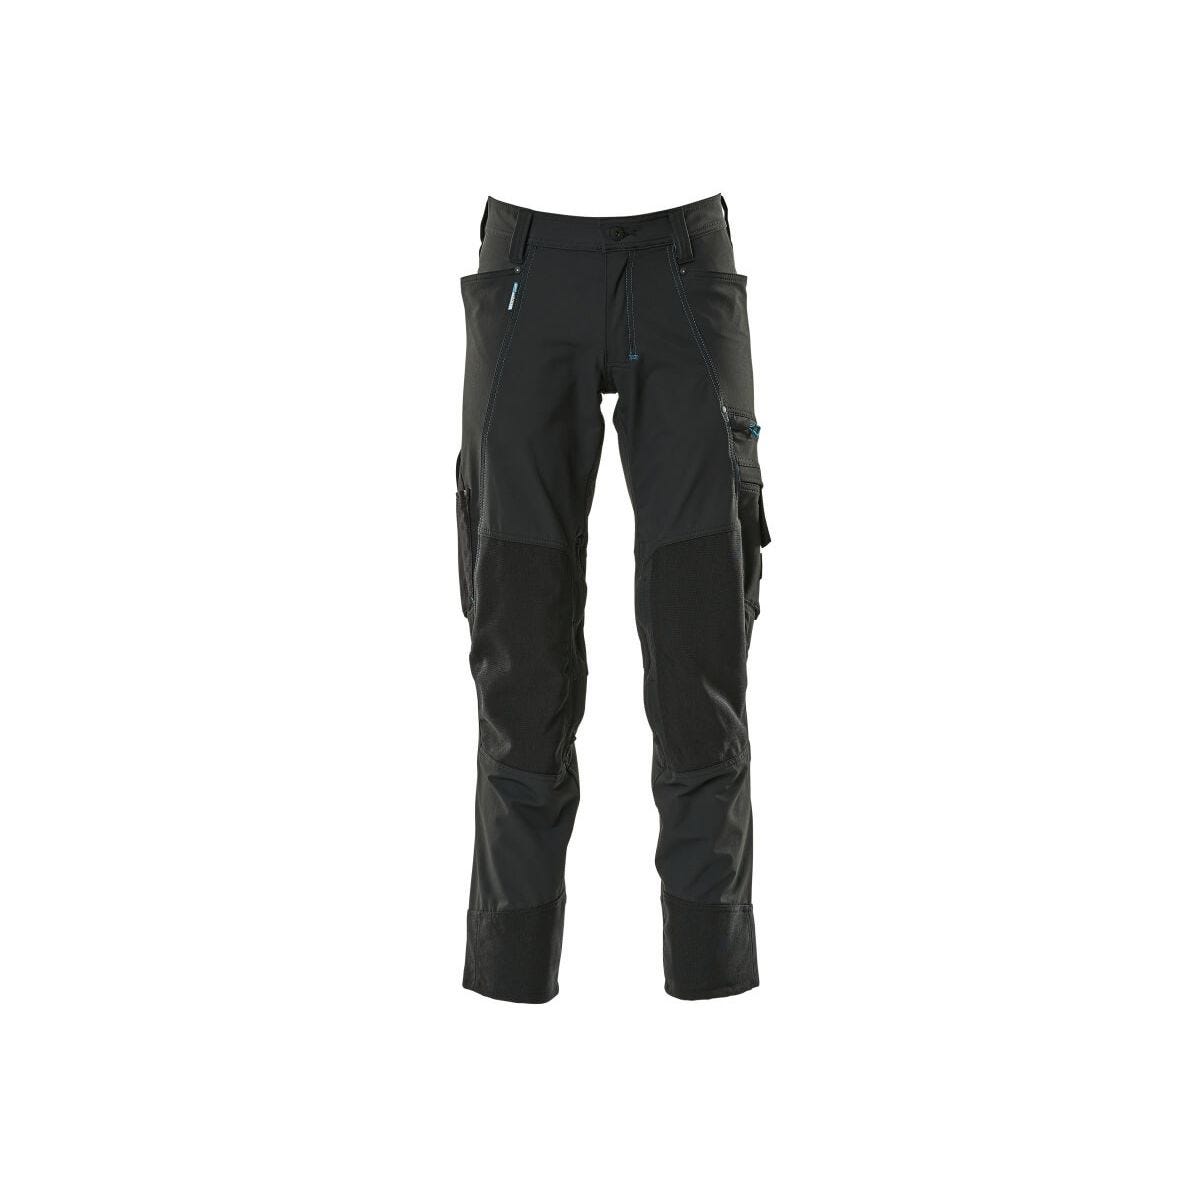 Pantalon avec poches genouillères ULTIMATE STRETCH Noir - Mascot - Taille W36.5/L32 0